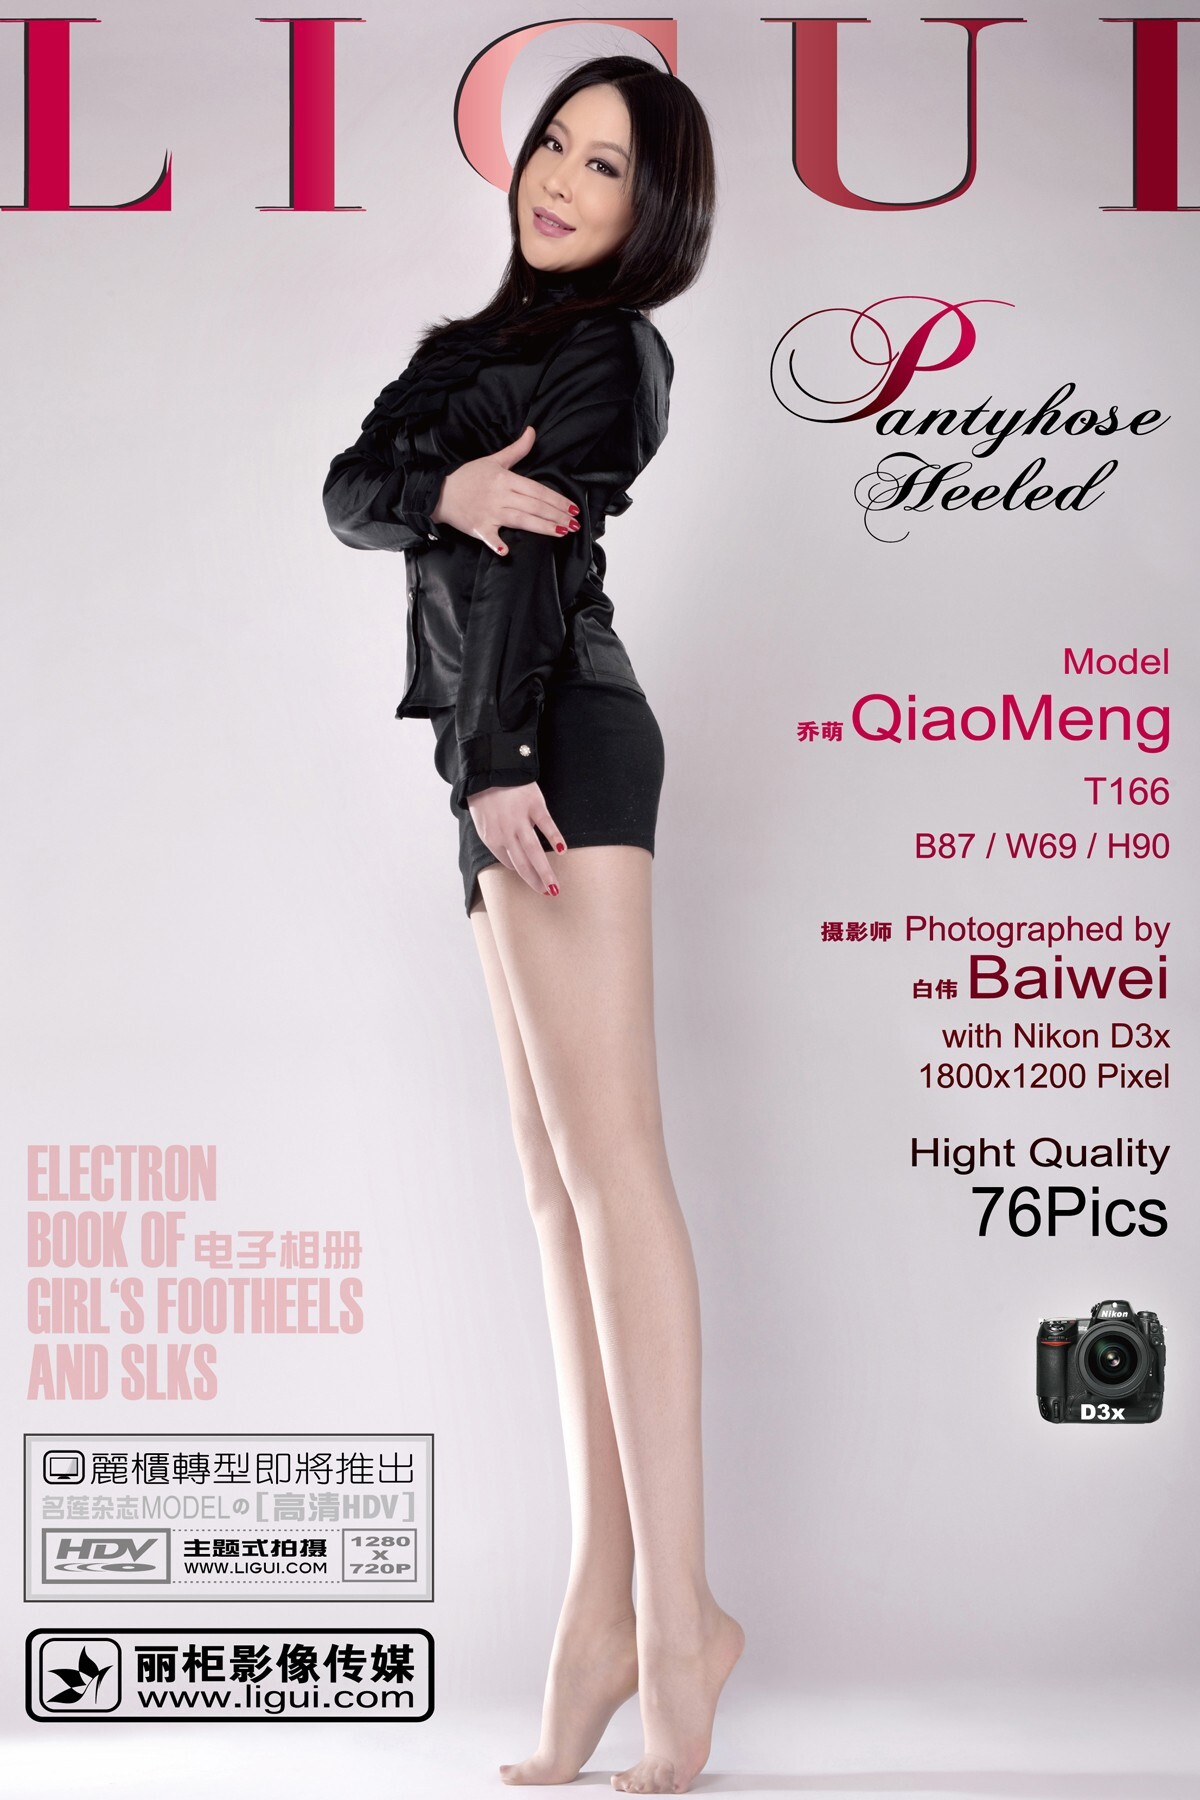 Qiao Meng, the latest model of Likang Club